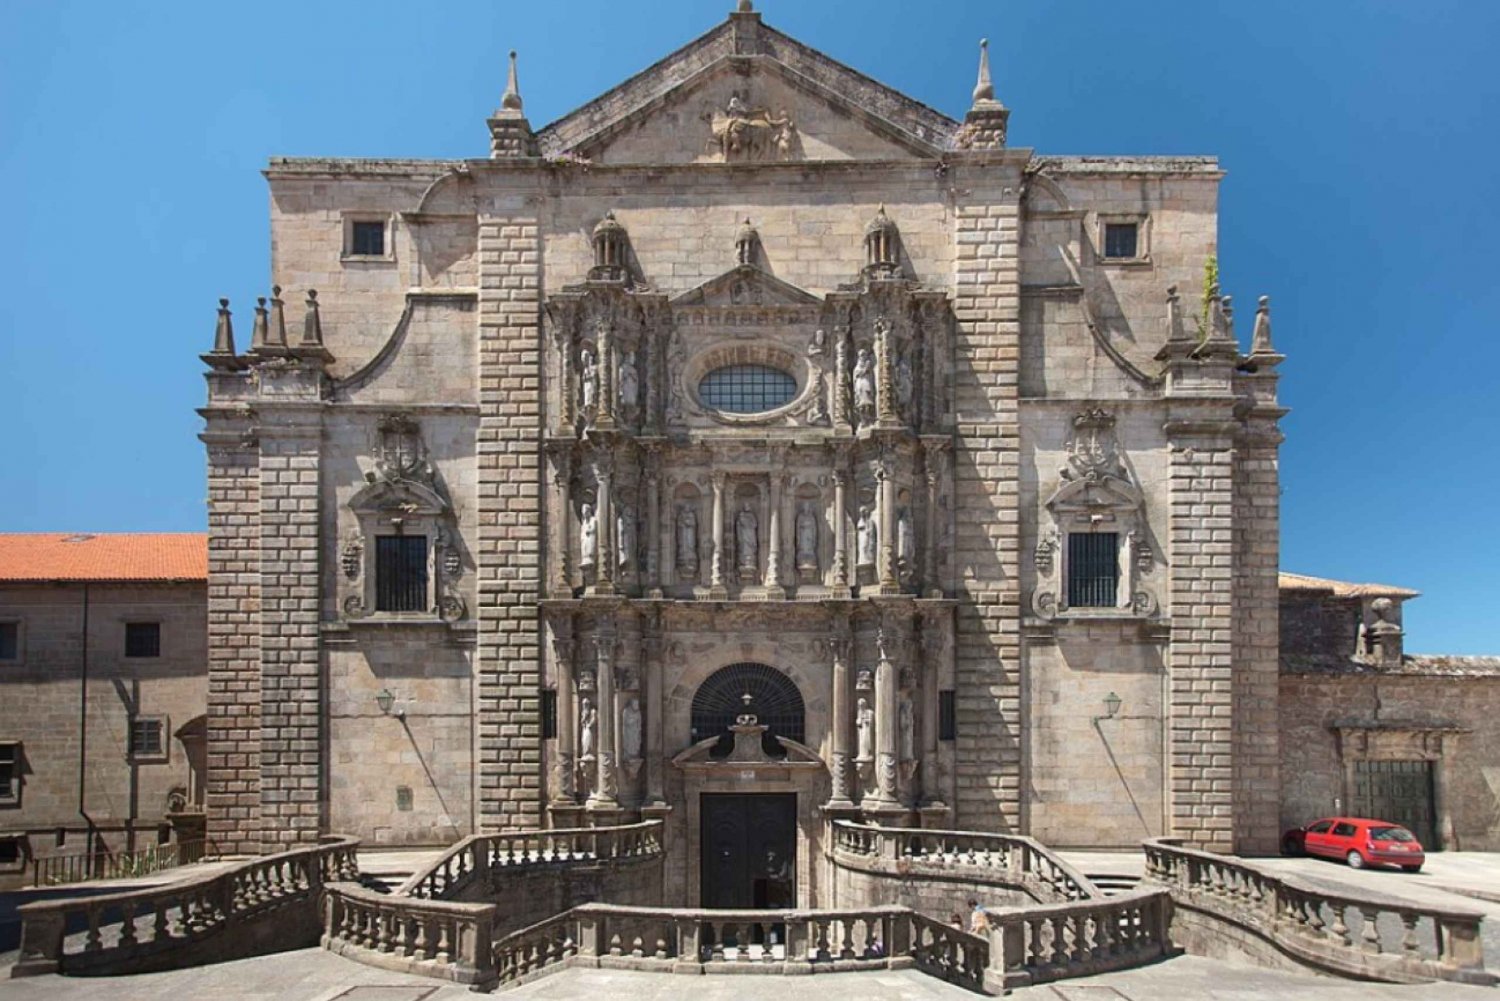 From Porto: Private Sightseeing Santiago da Compostela Tour